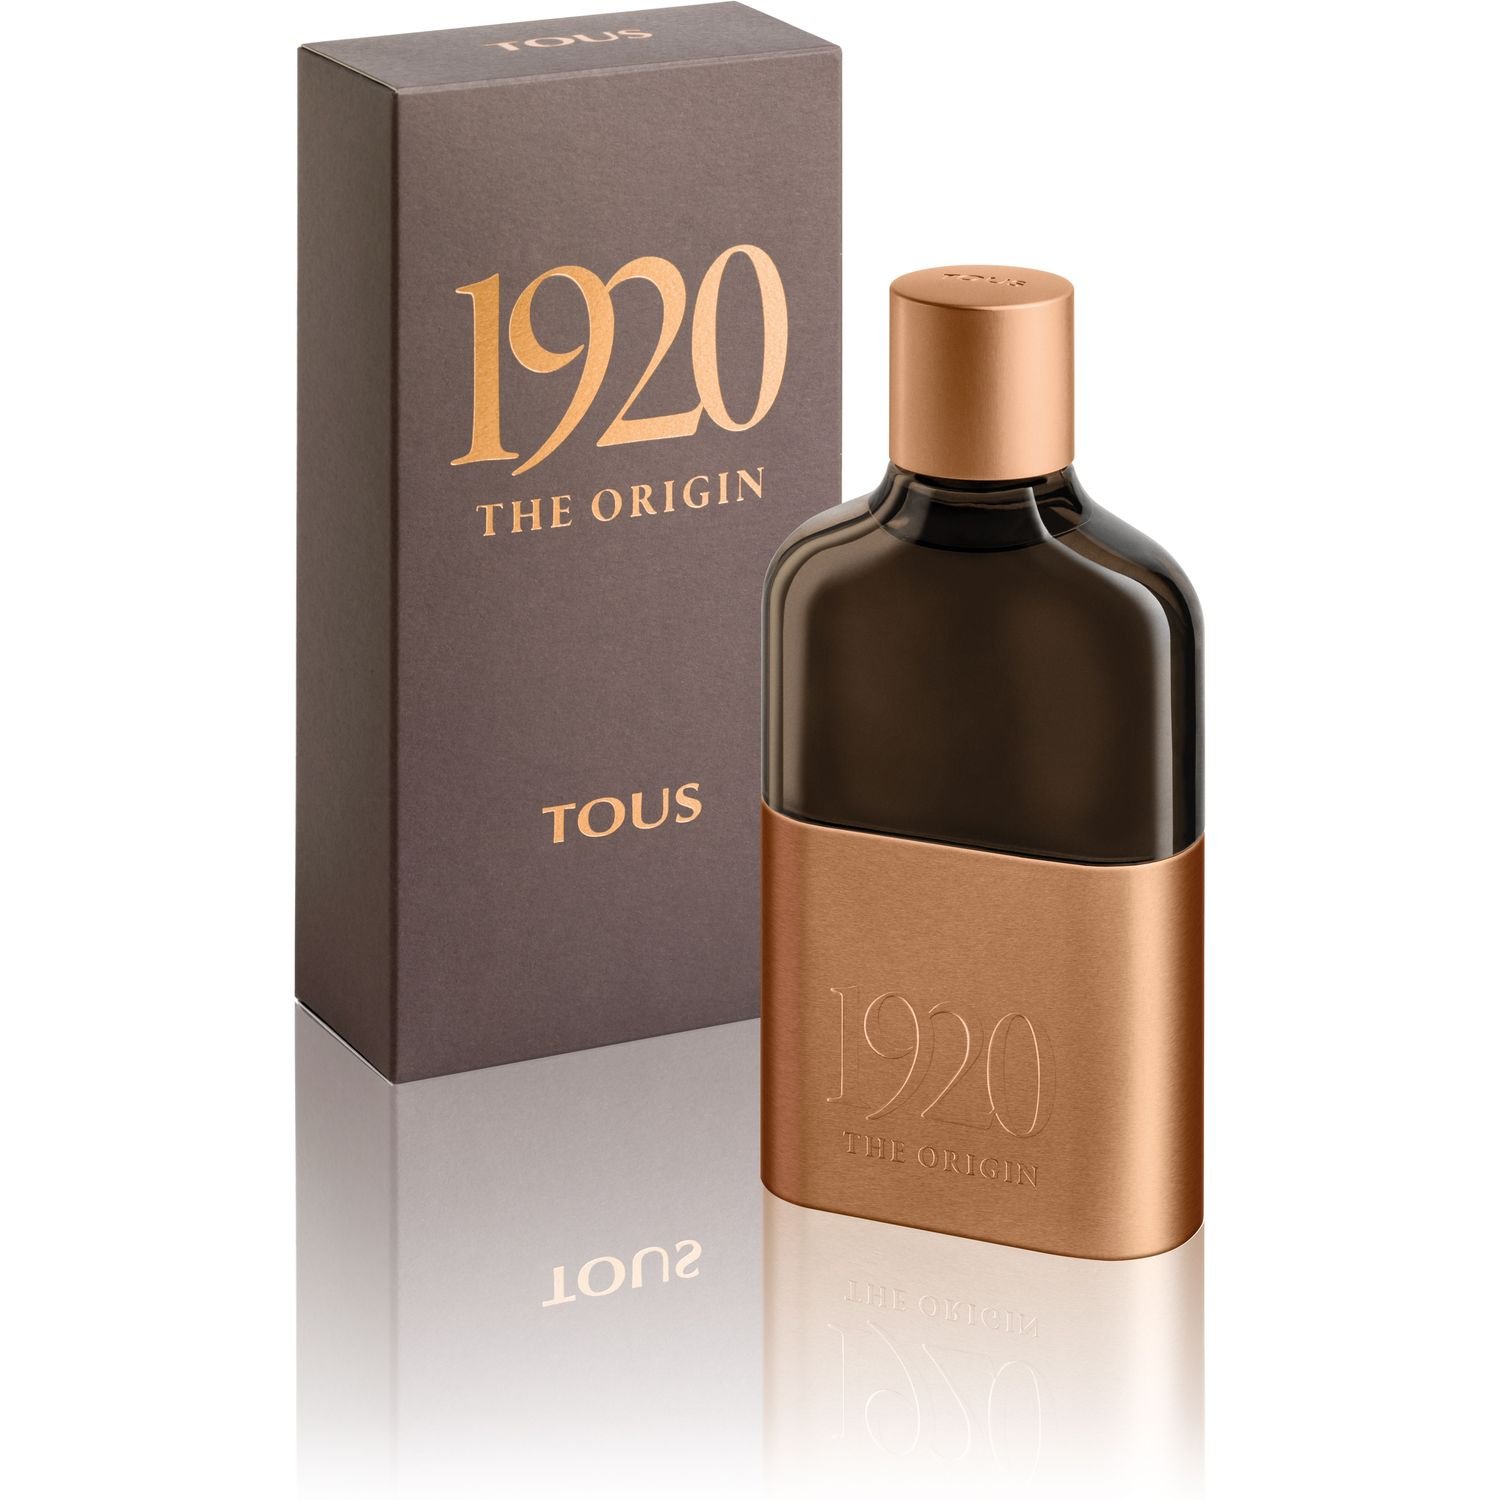 Парфюмерная вода для мужчин Tous 1920 The Origin, 100 мл - фото 1